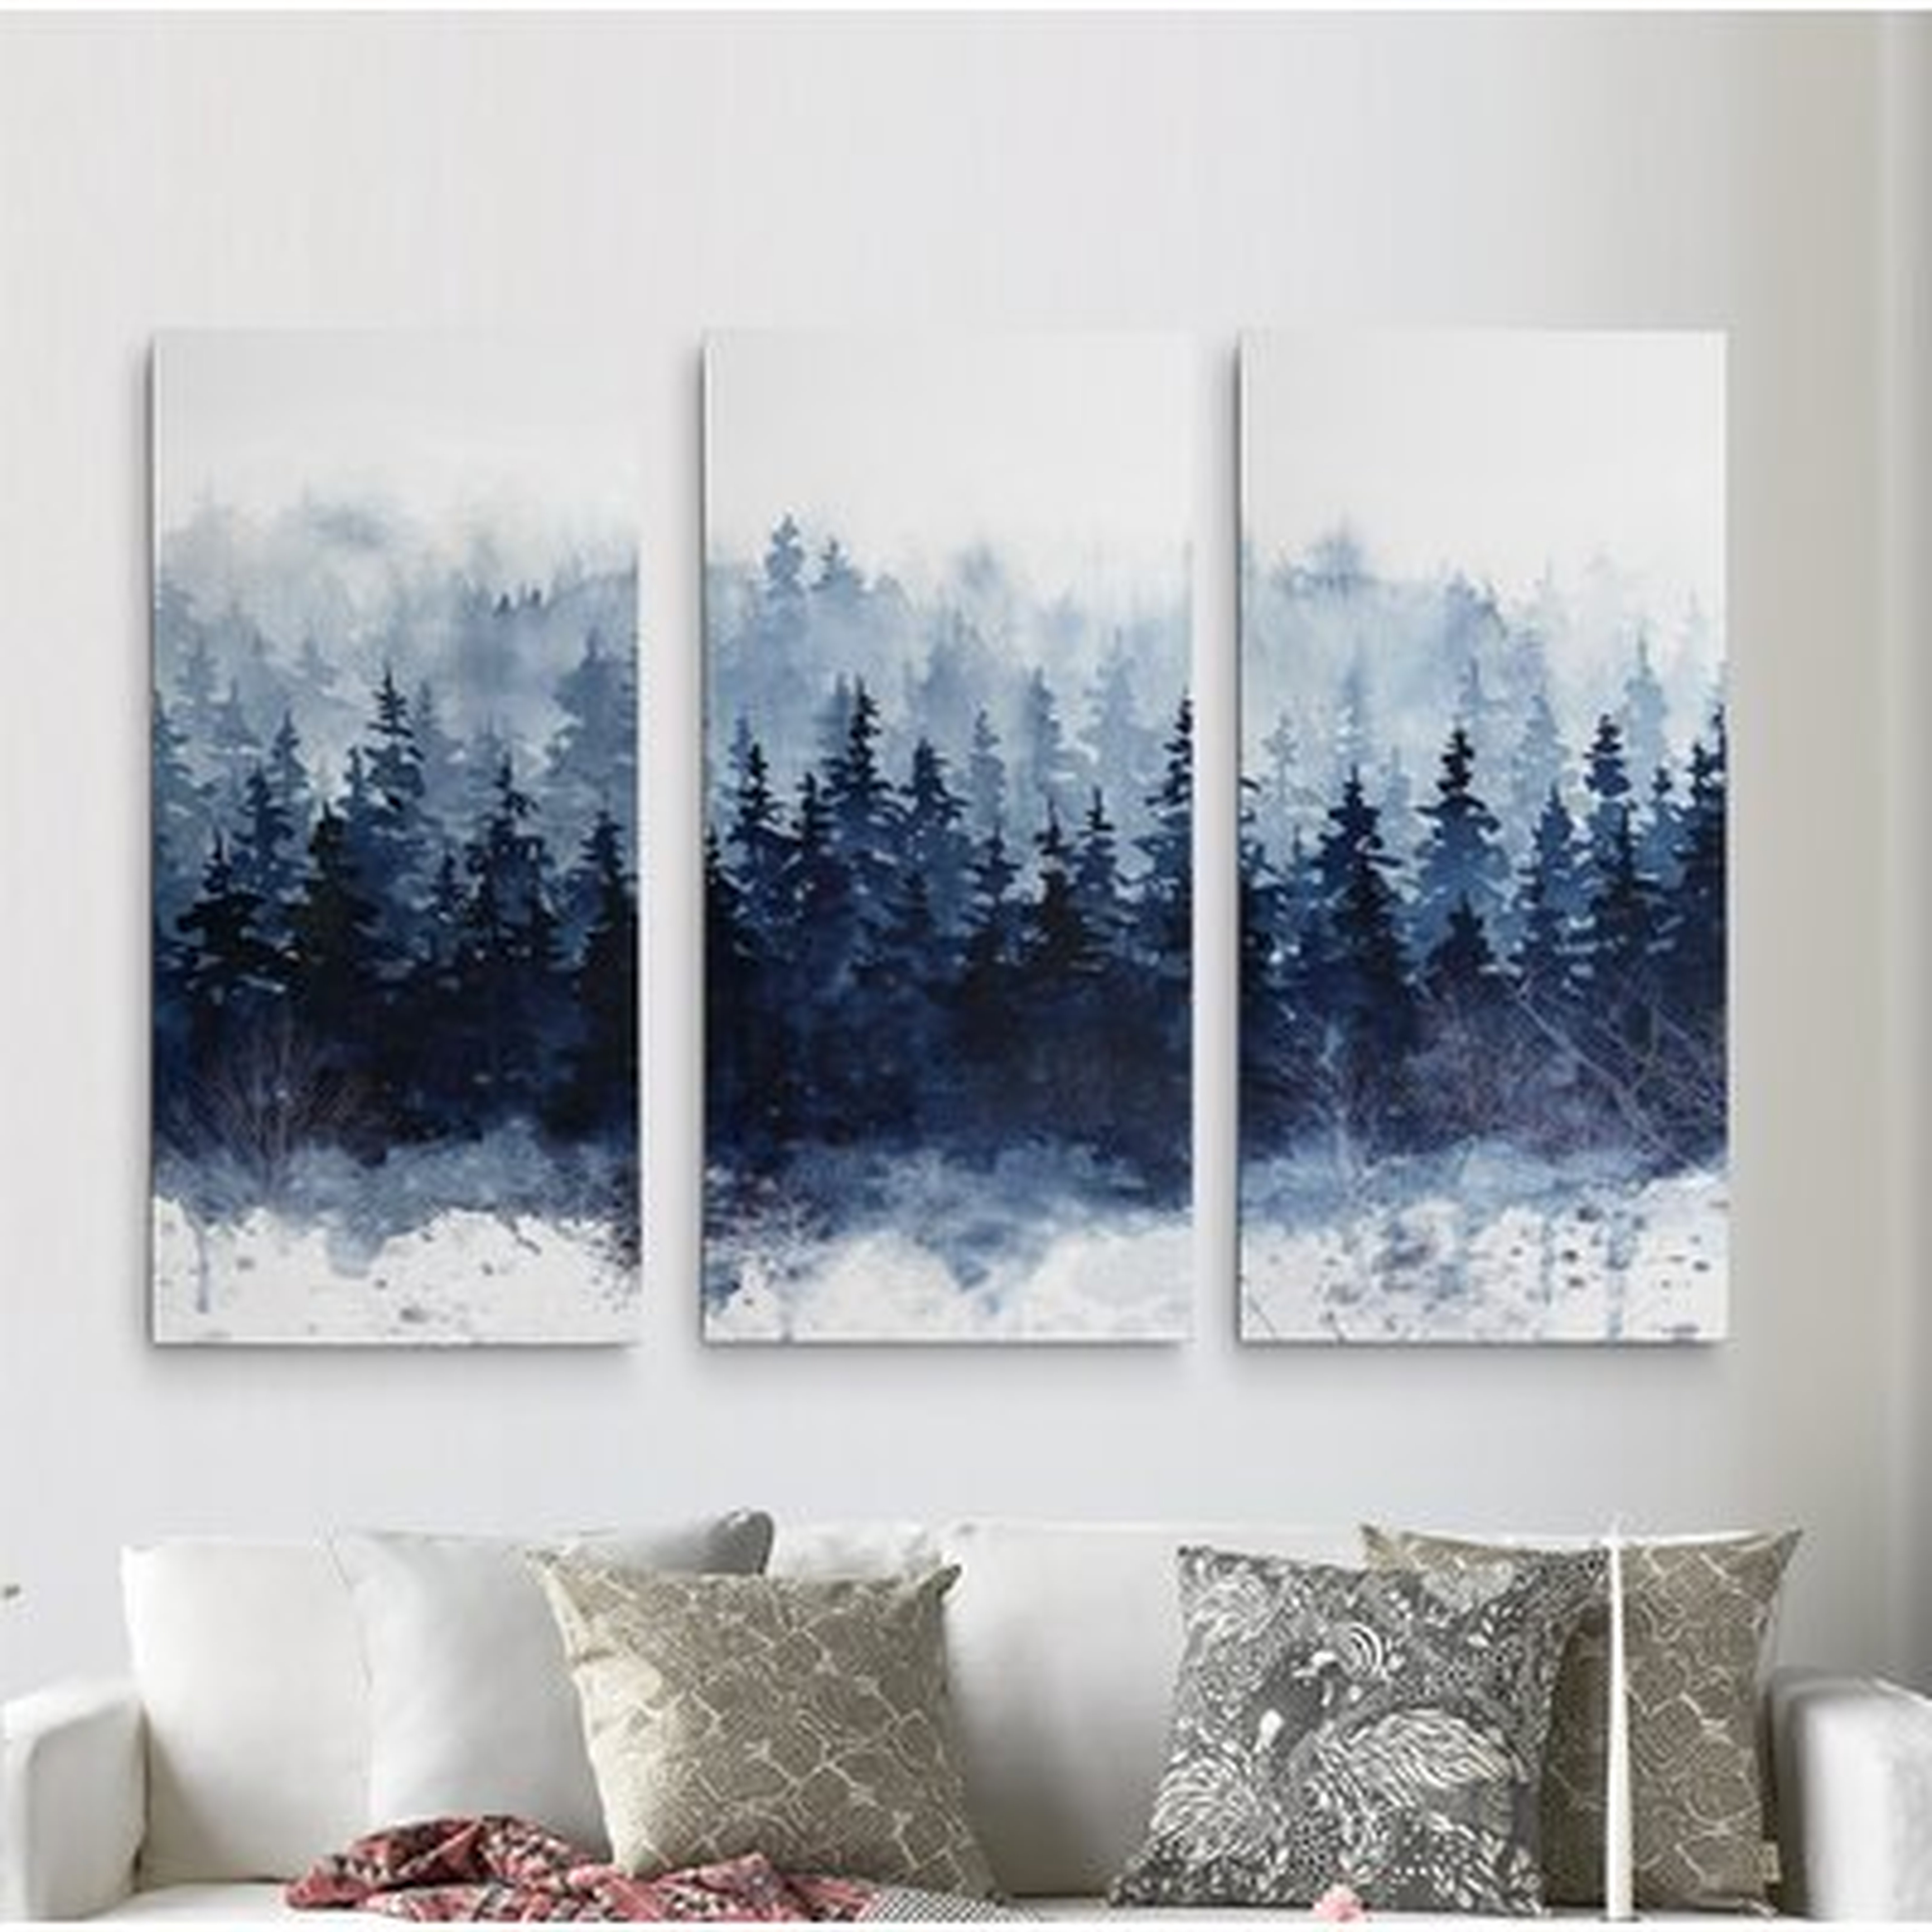 A Premium 'Indigo Forest' Painting Multi-Piece Image on Canvas - Wayfair